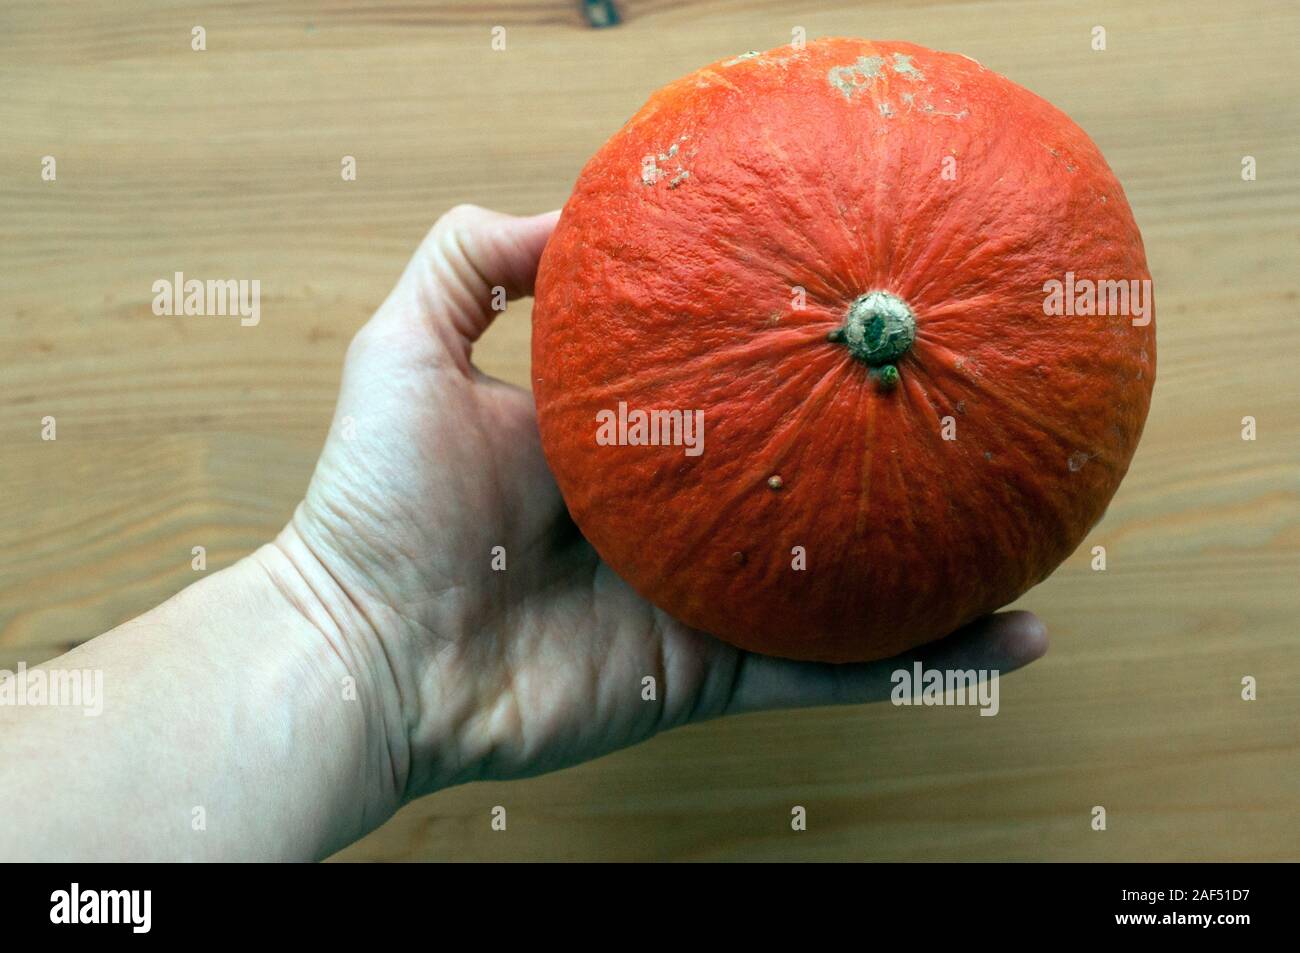 Hand holding a small orange pumpkin. Eating seasonal vegetables in autumn. Stock Photo